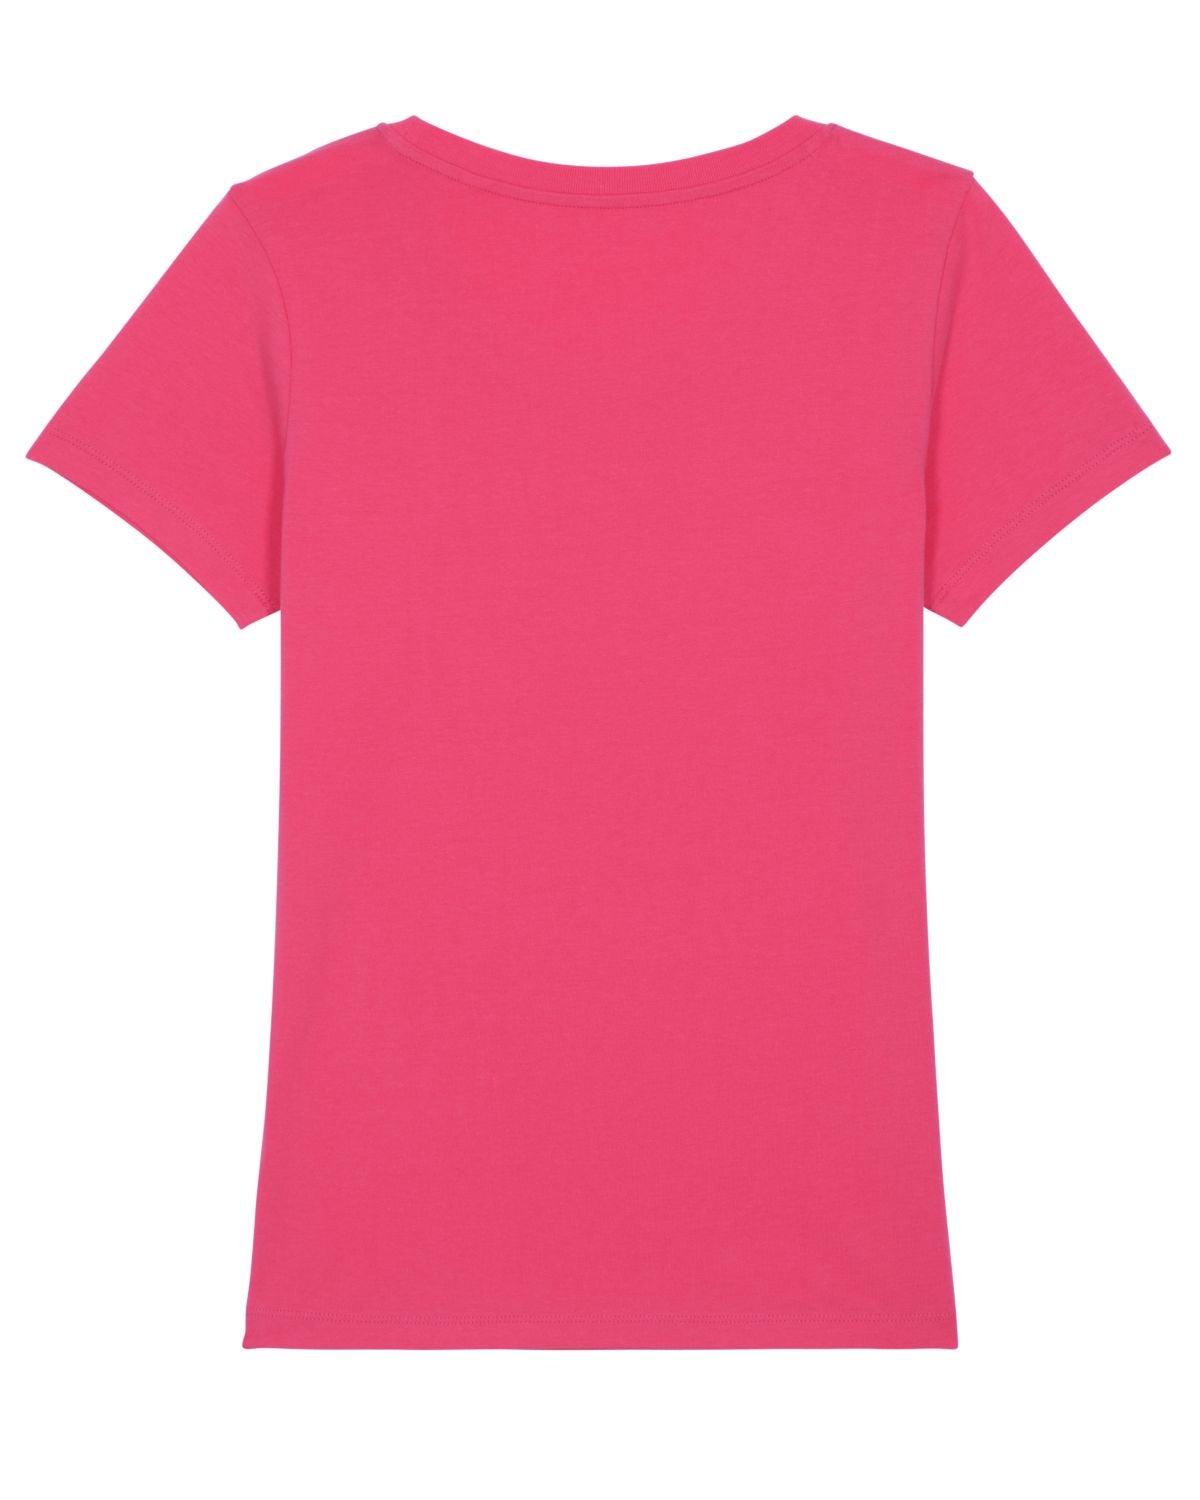 DEERN Shirt pink punch XS